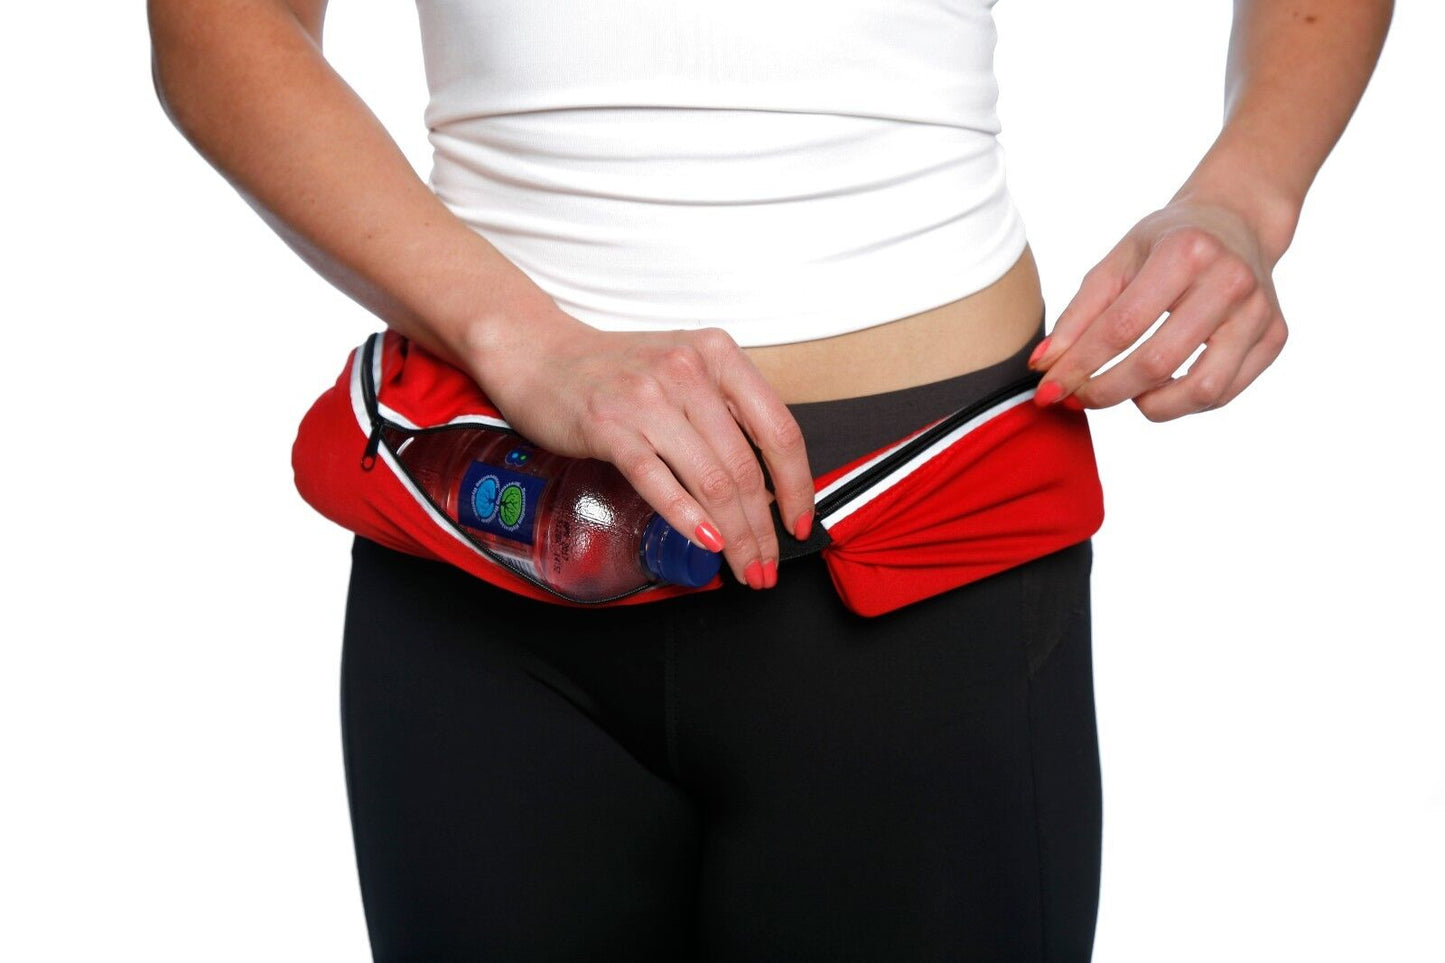 Stretch Pocket Belt with 2 expandable Pockets